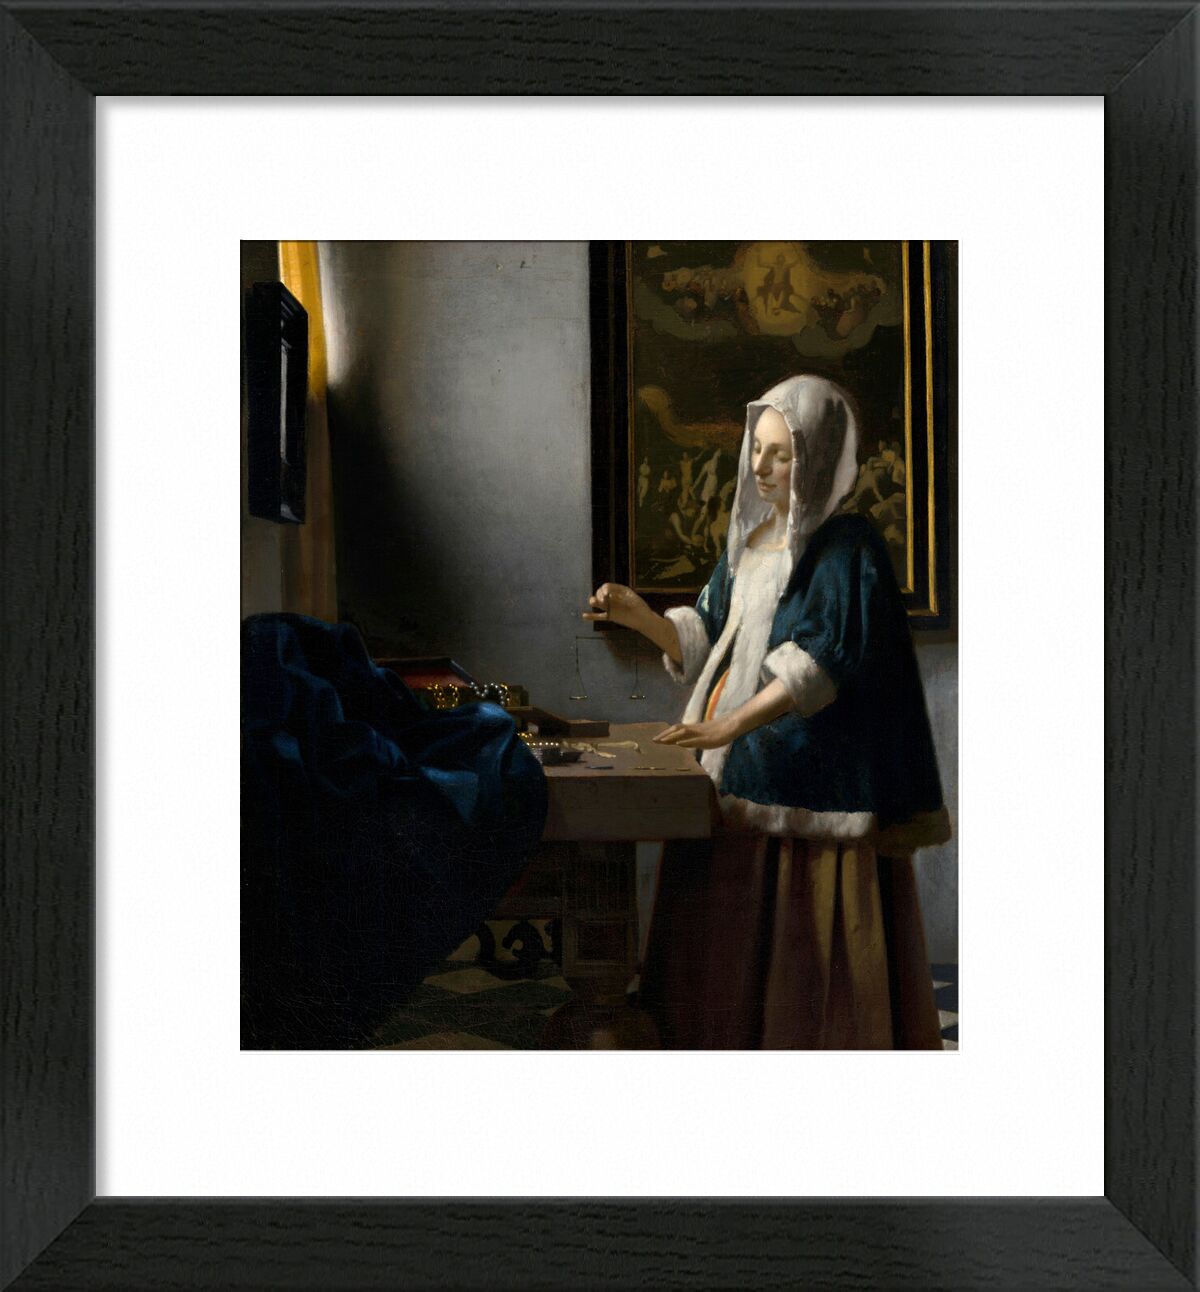 Frau Hält eine Waage - Vermeer von Bildende Kunst, Prodi Art, Vermeer, Frau, Johannes Vermeer